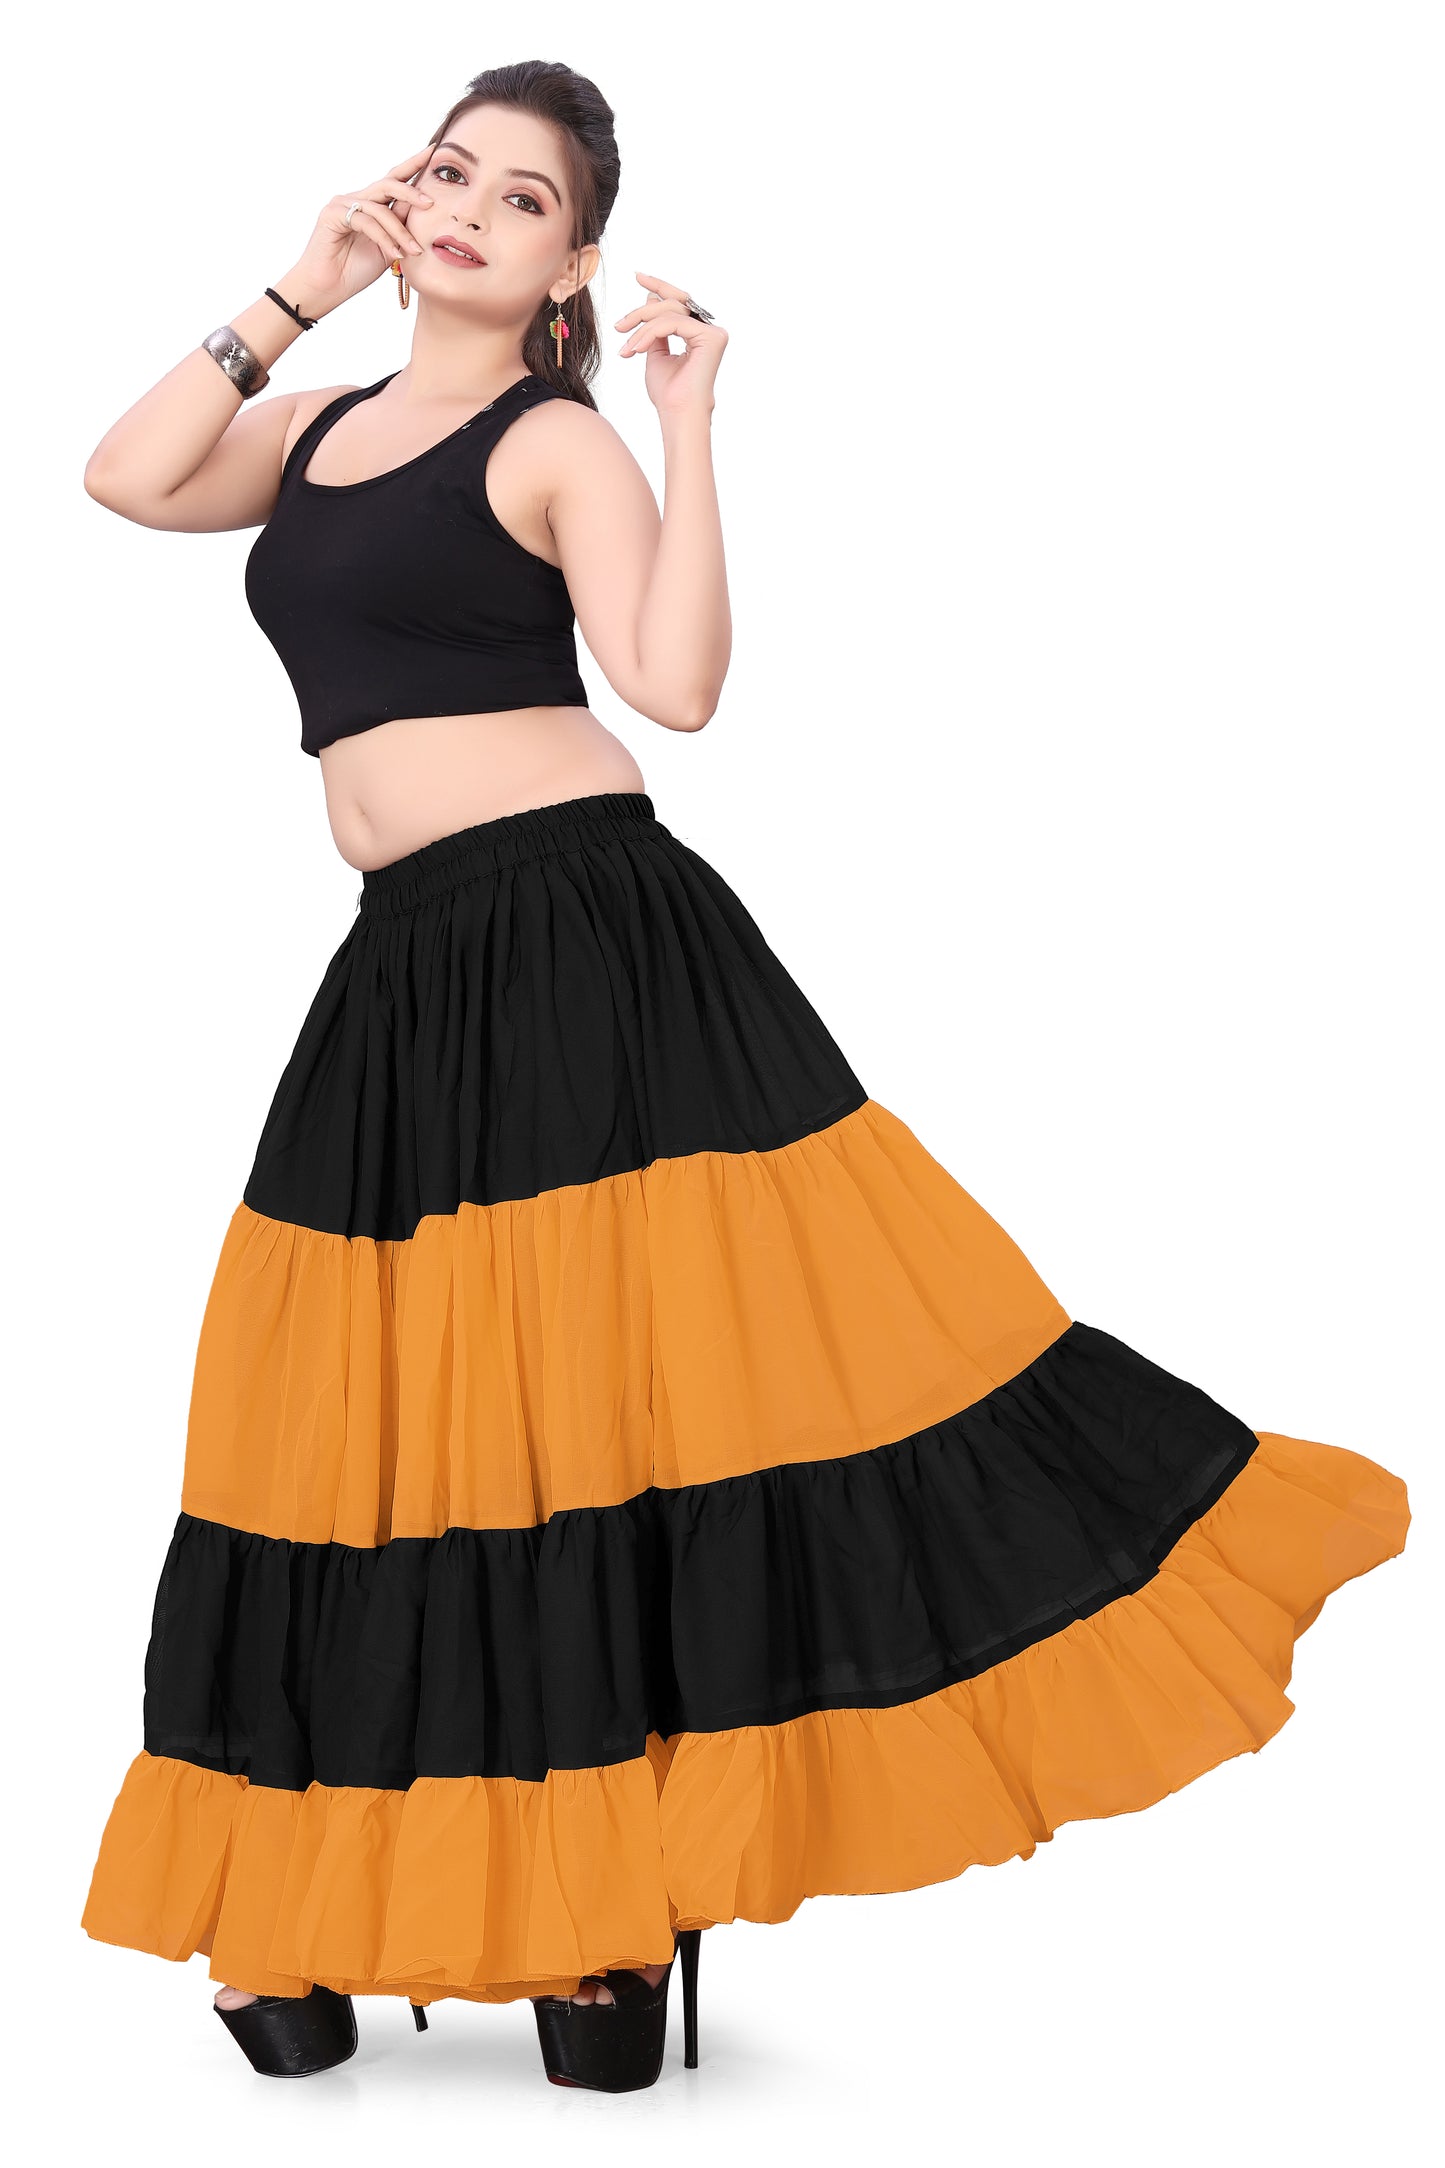 Chiffon 25 Yard 4 Tier skirt Belly Dance Skirt C63- Regular Size 2